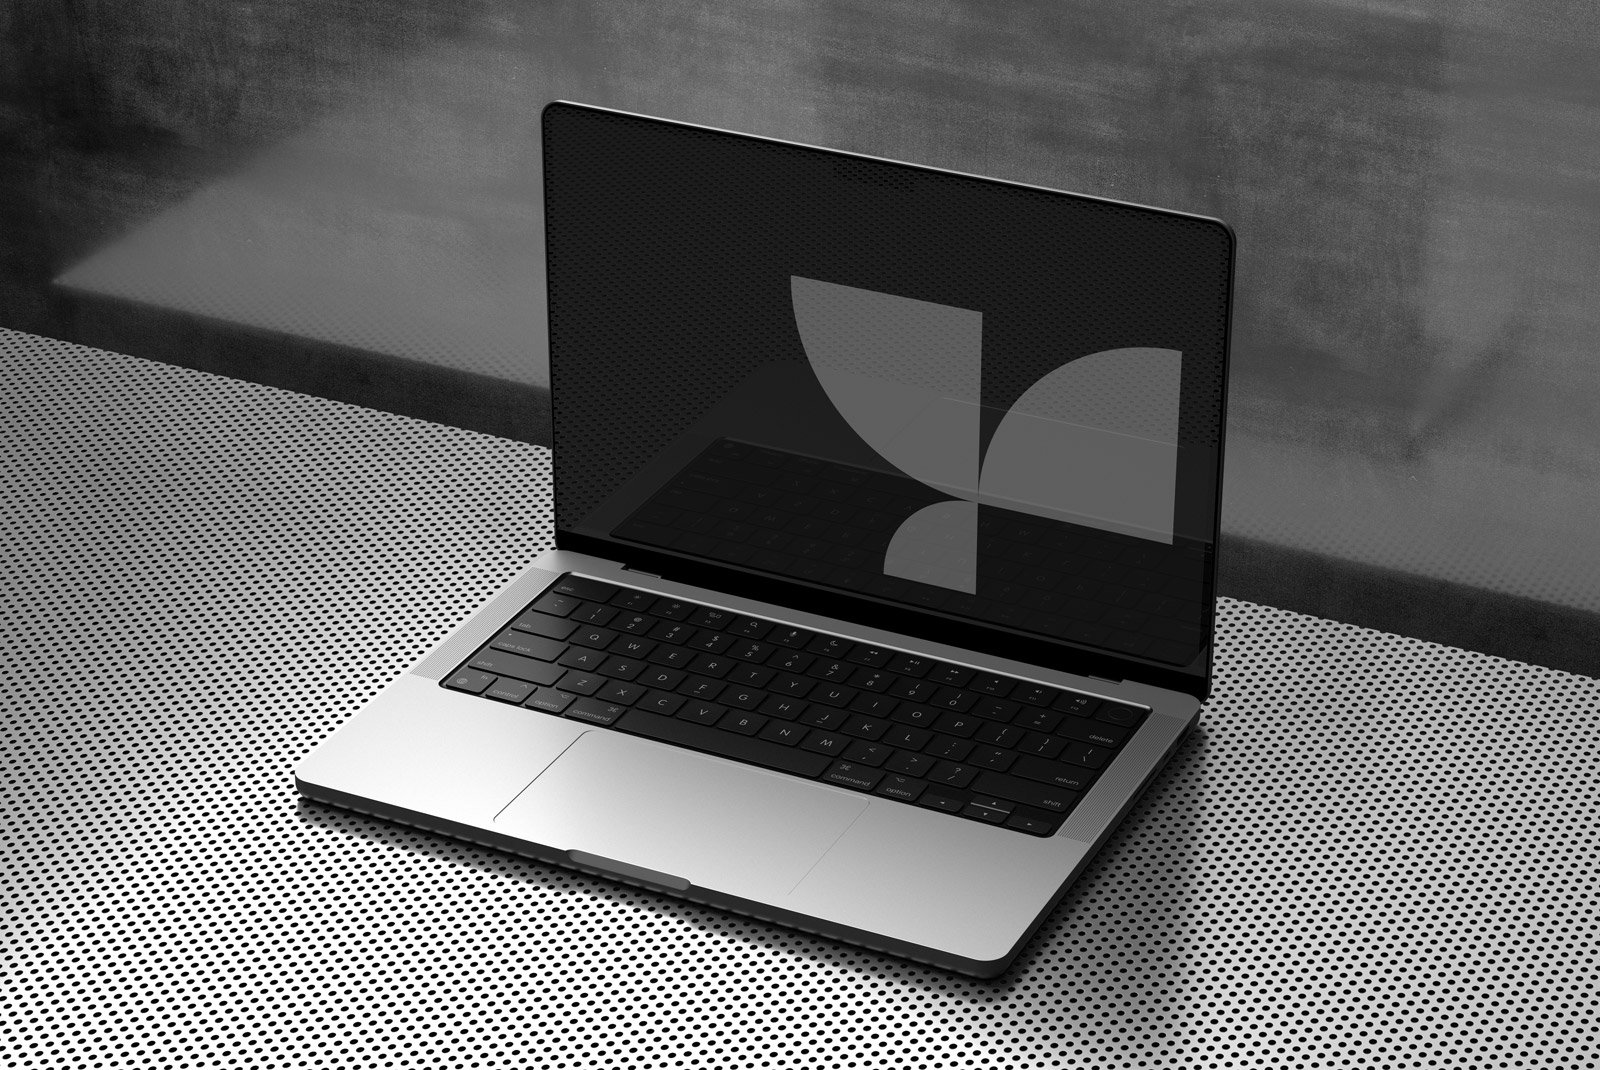 MacBook Pro 02 Standard Mockup cover image.